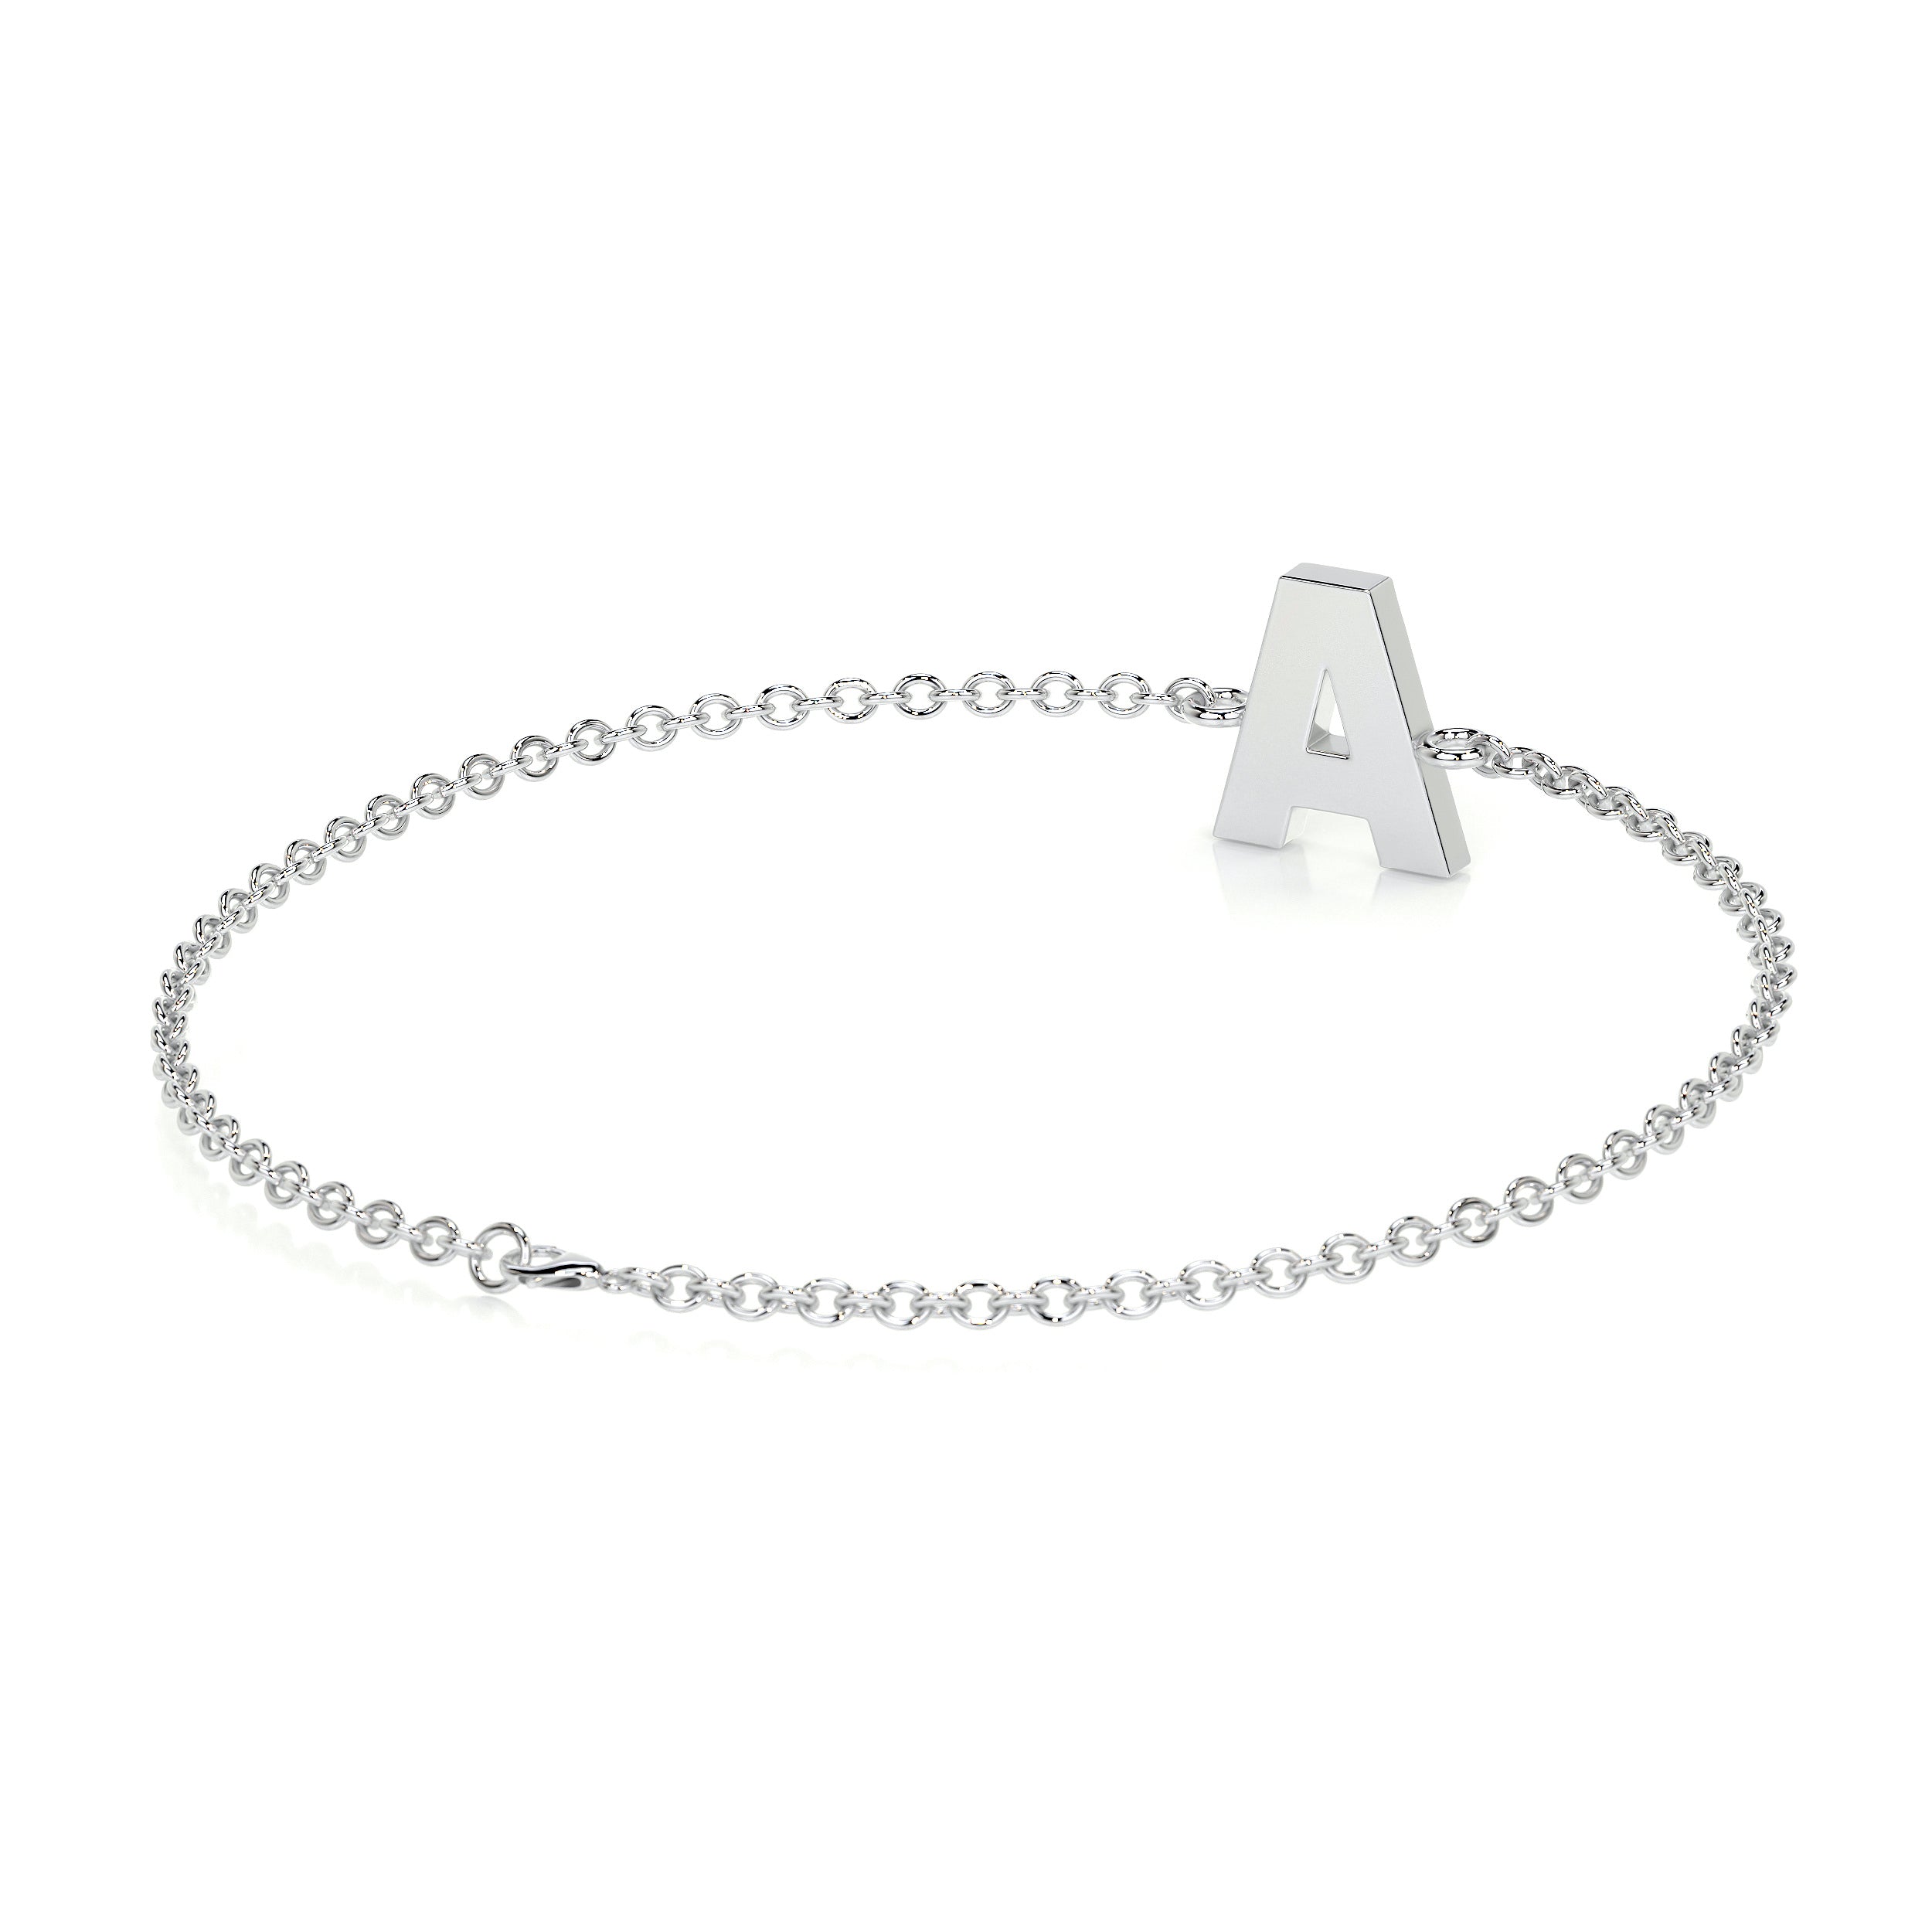 Bridget Letter Diamonds Bracelet   (0.30 Carat) -14K White Gold